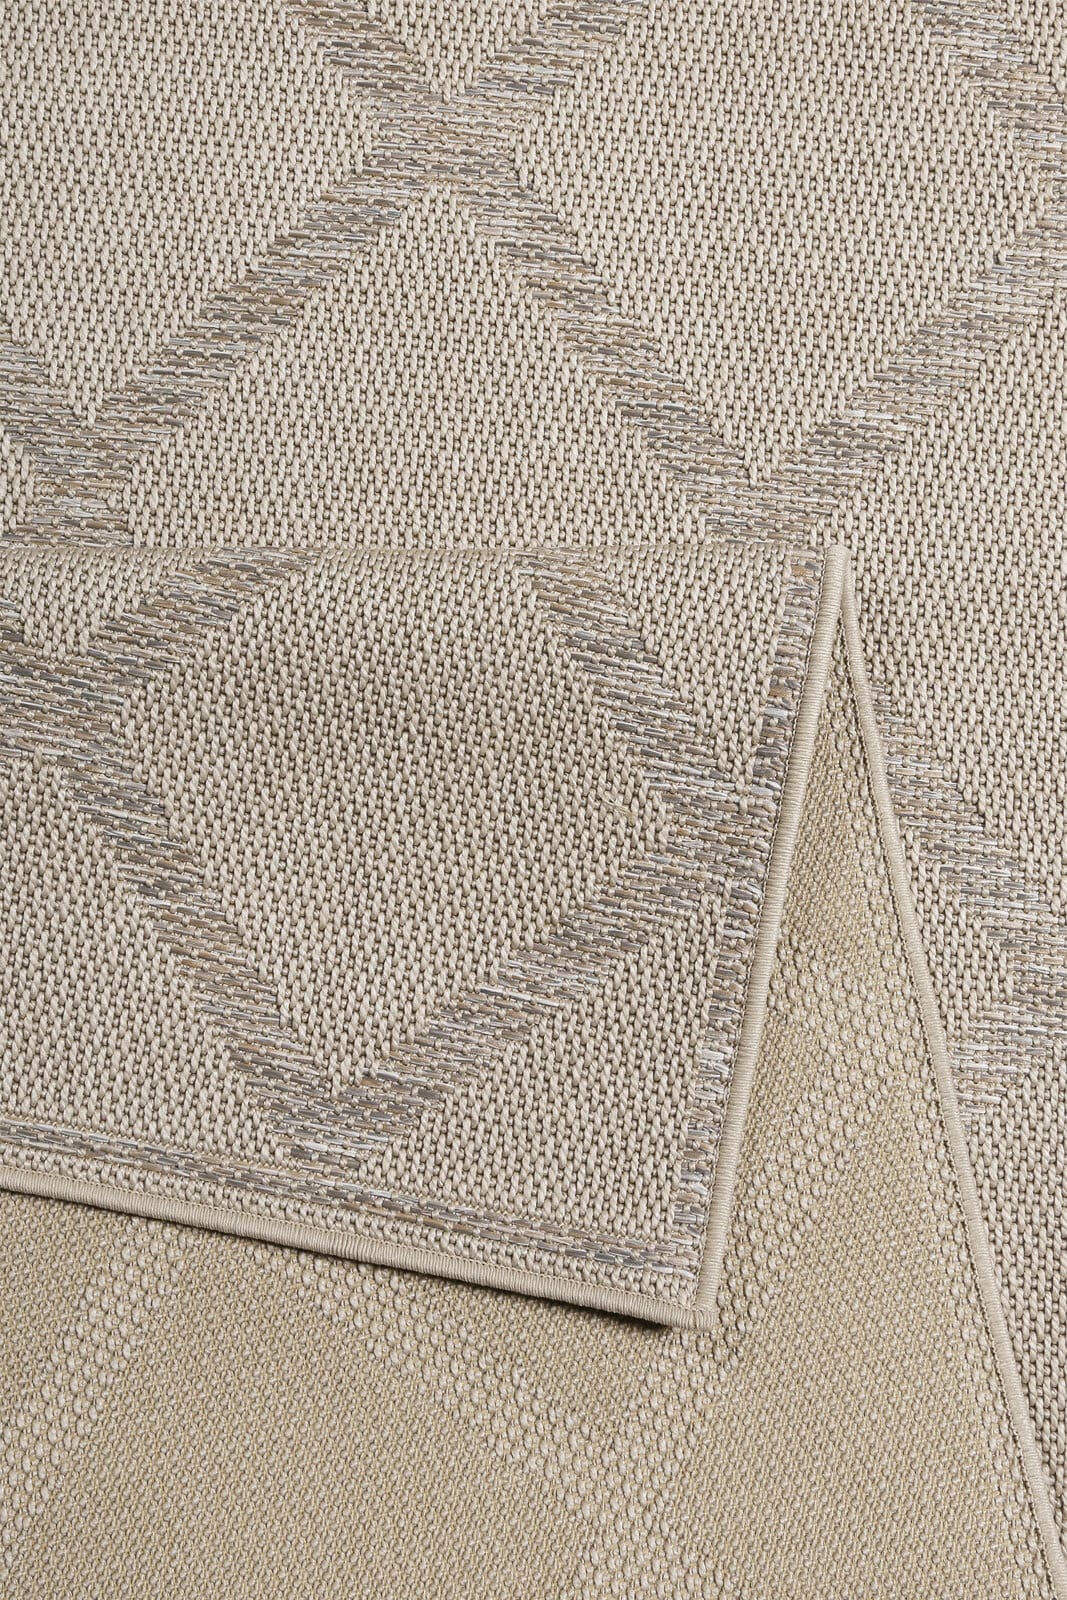 ESPRIT Outdoorteppich RHOMB 200 x 290 cm beige/grau